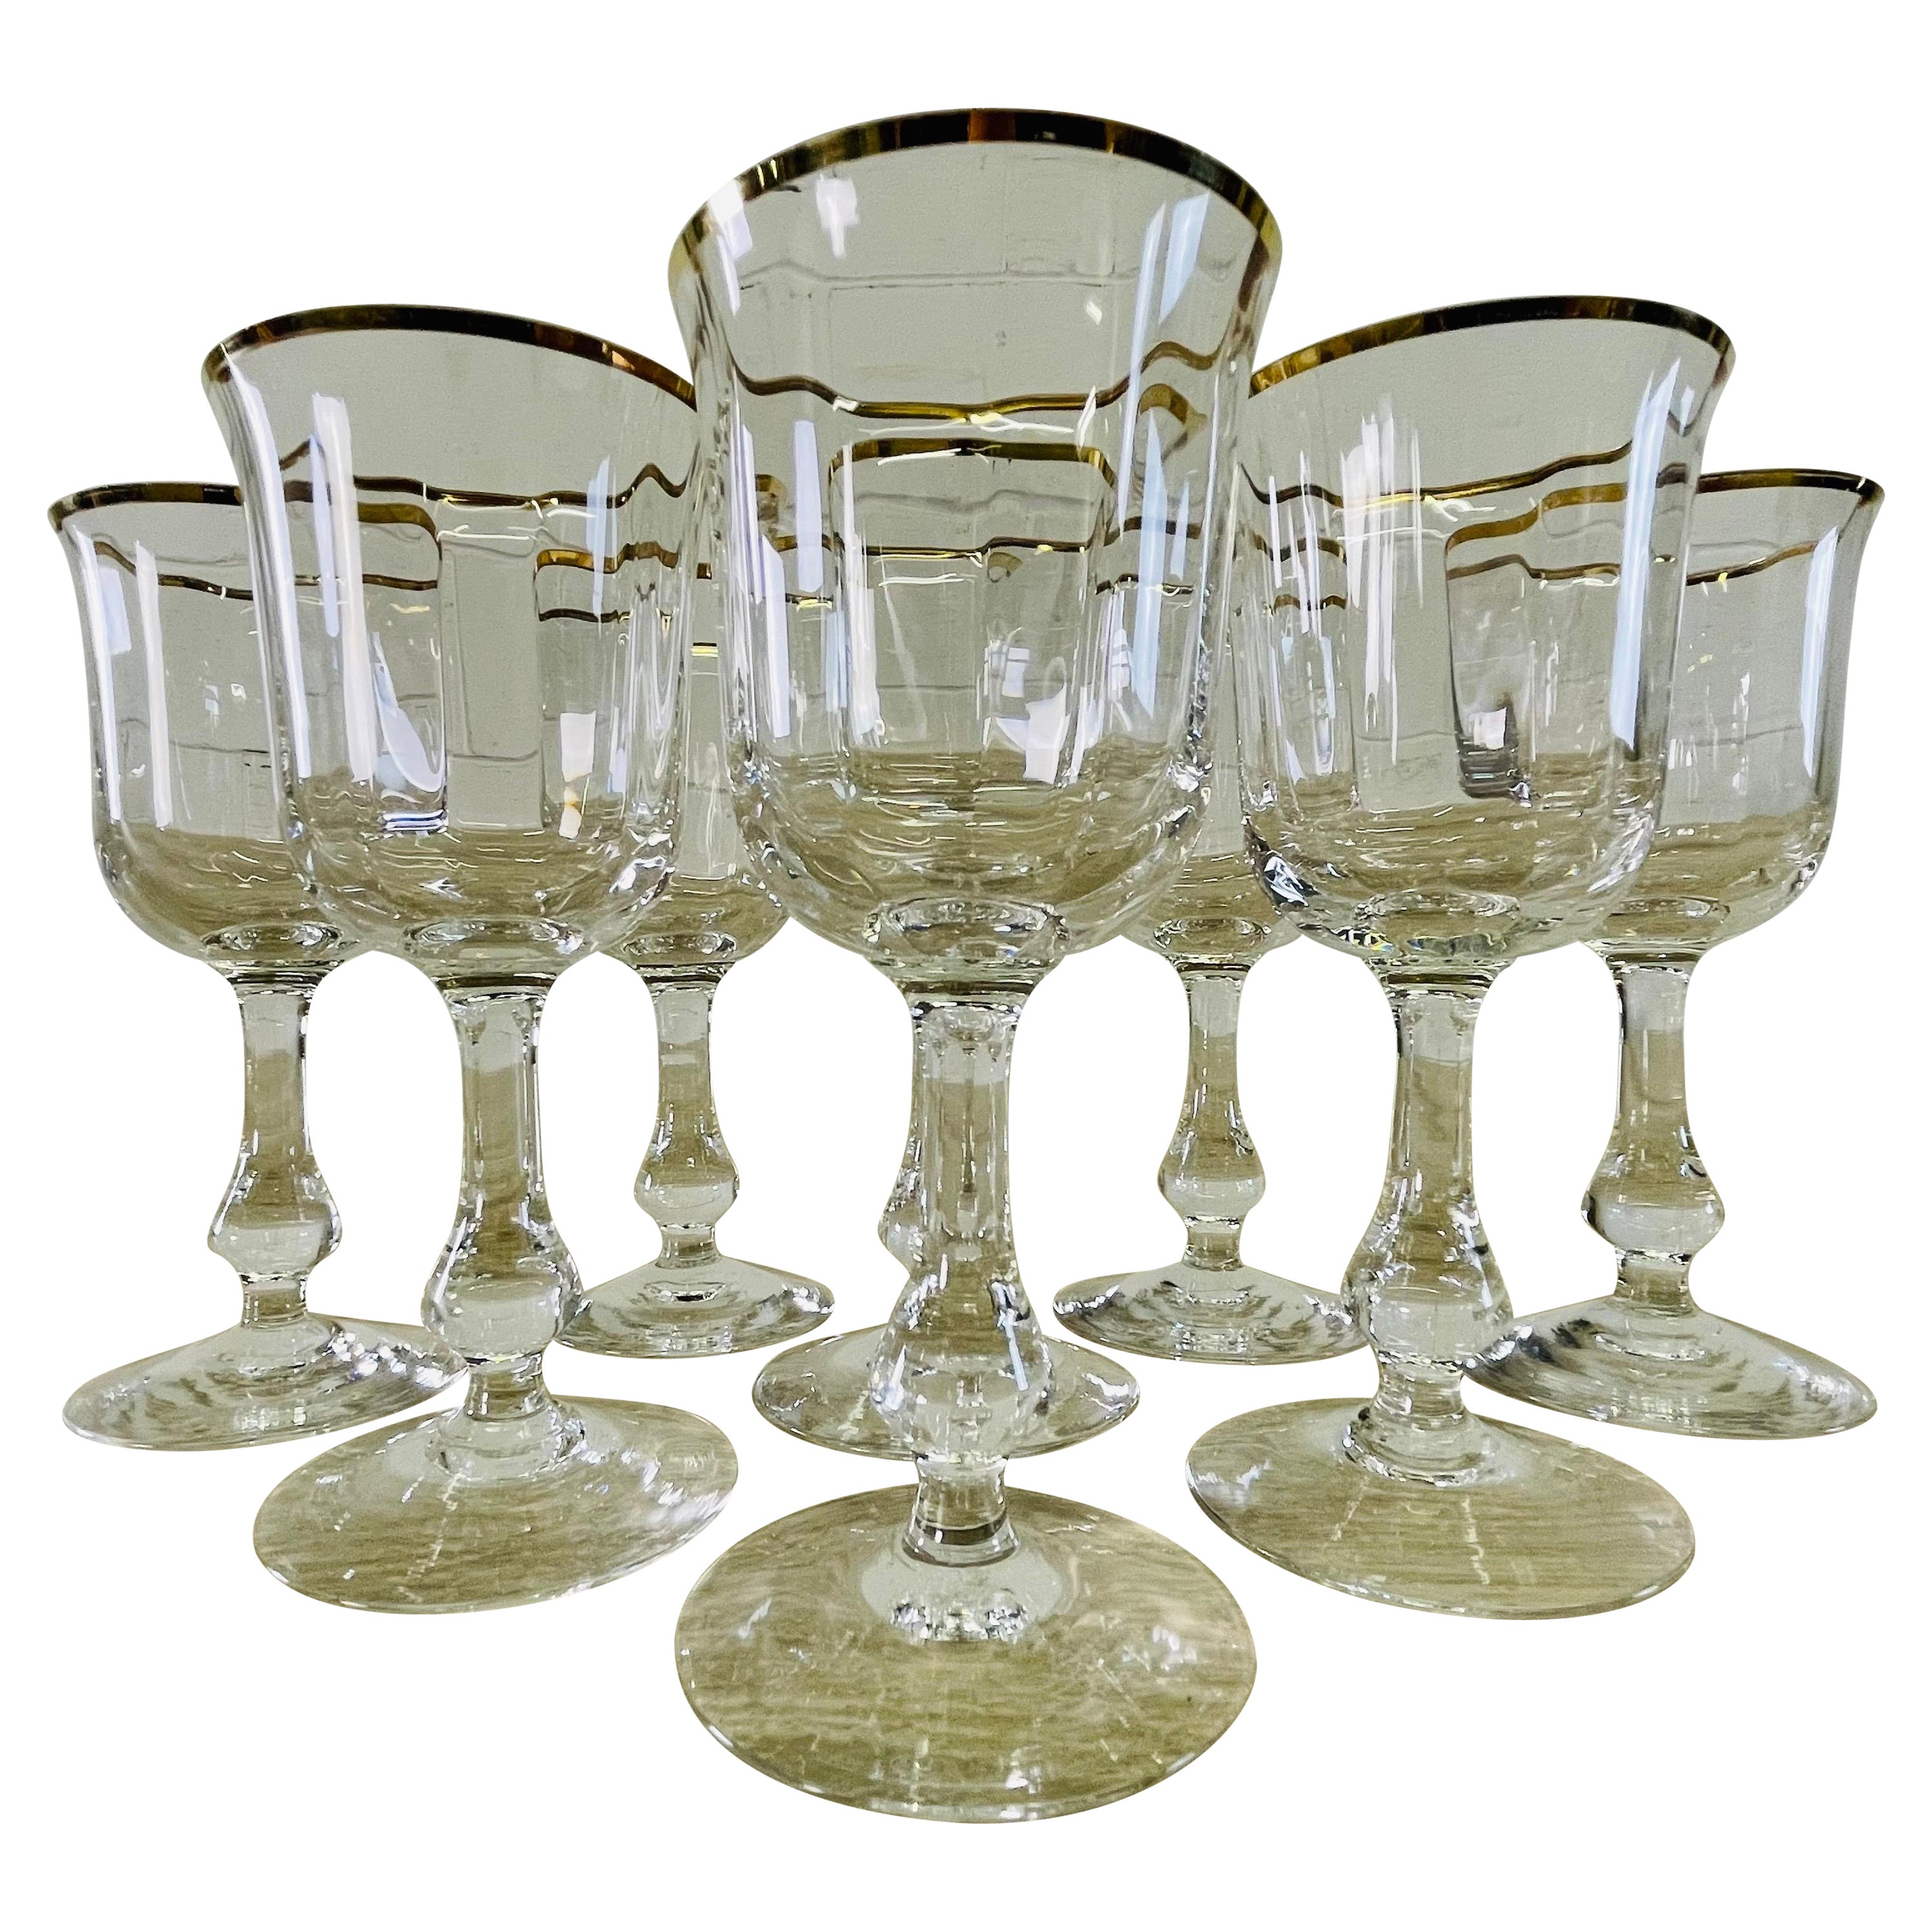 1970s Gold Rim Glass Wine Stems, Set of 8